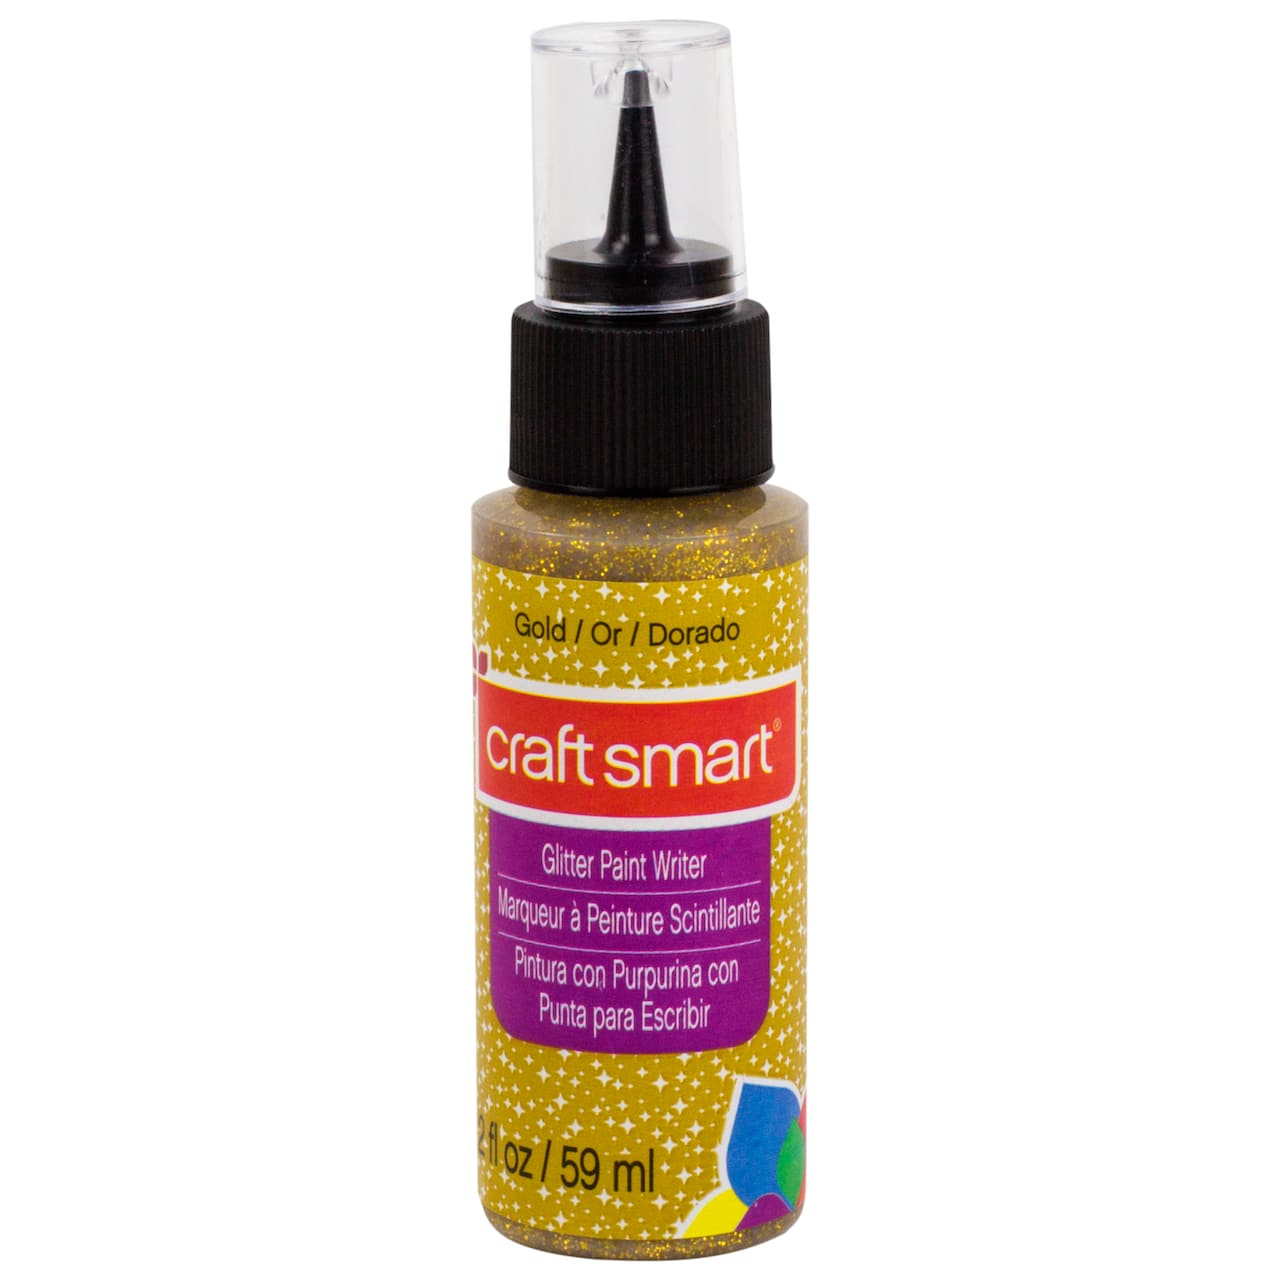 Glitter Paint Writer by Craft Smart&#xAE;